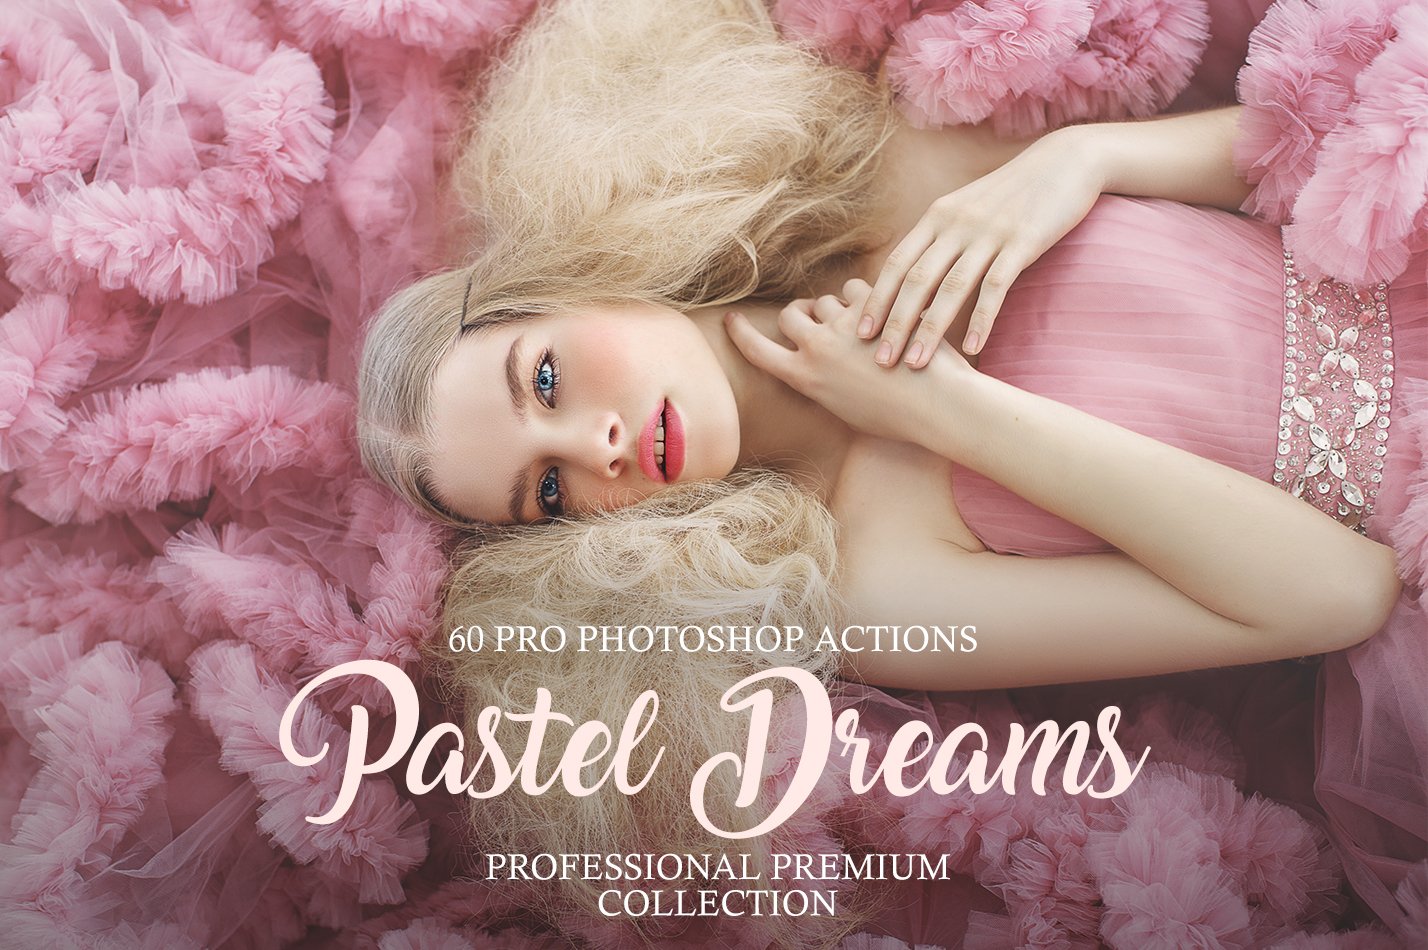 Pastel Dreams Photoshop Actionscover image.